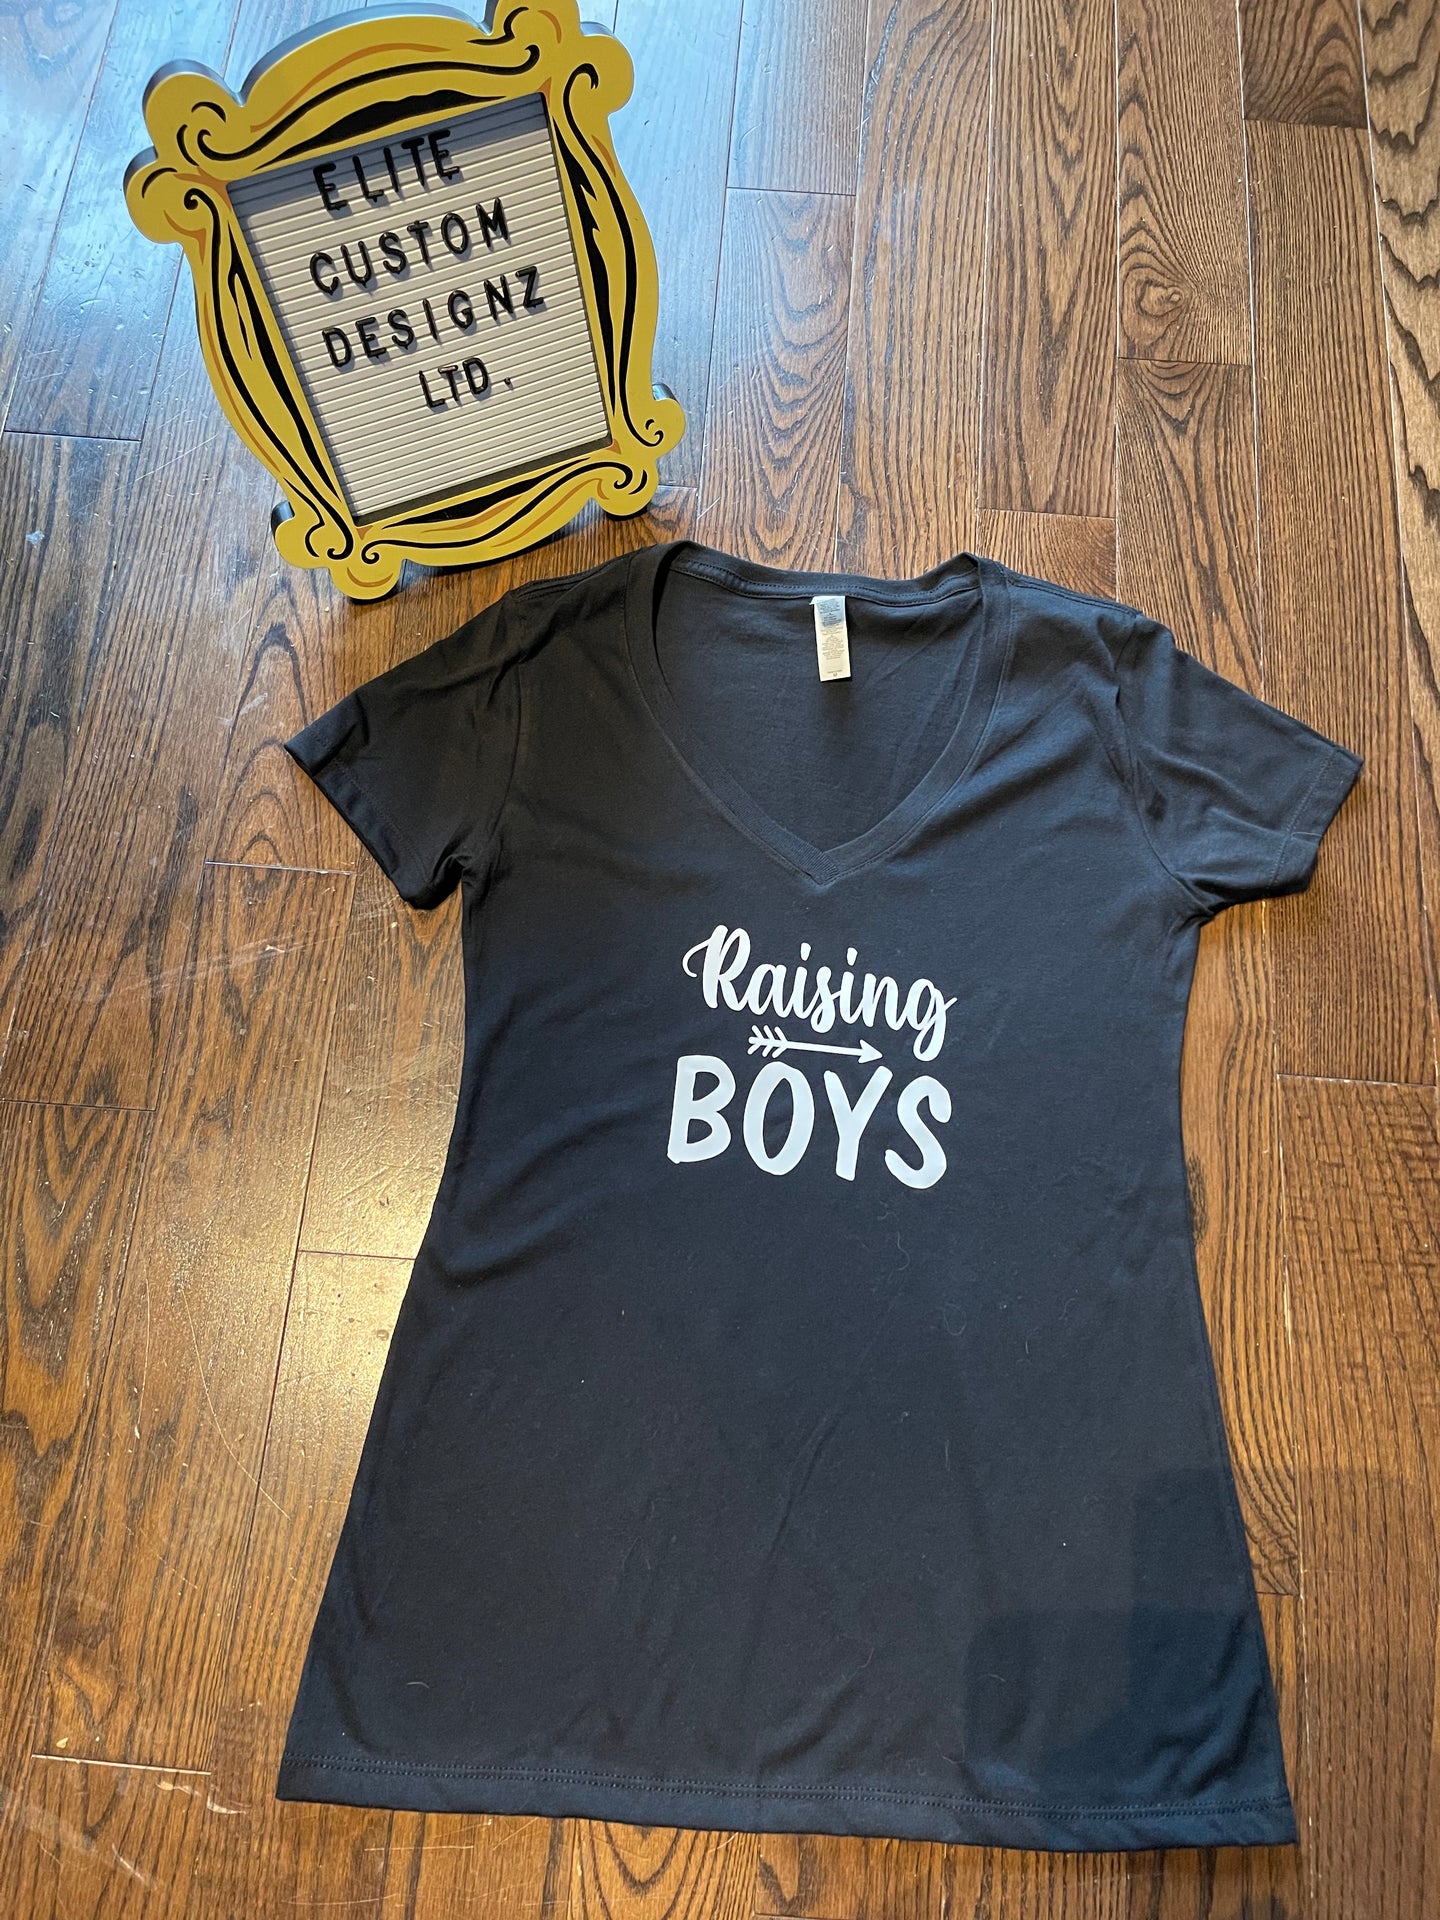 Raising Boys Adult T-Shirt